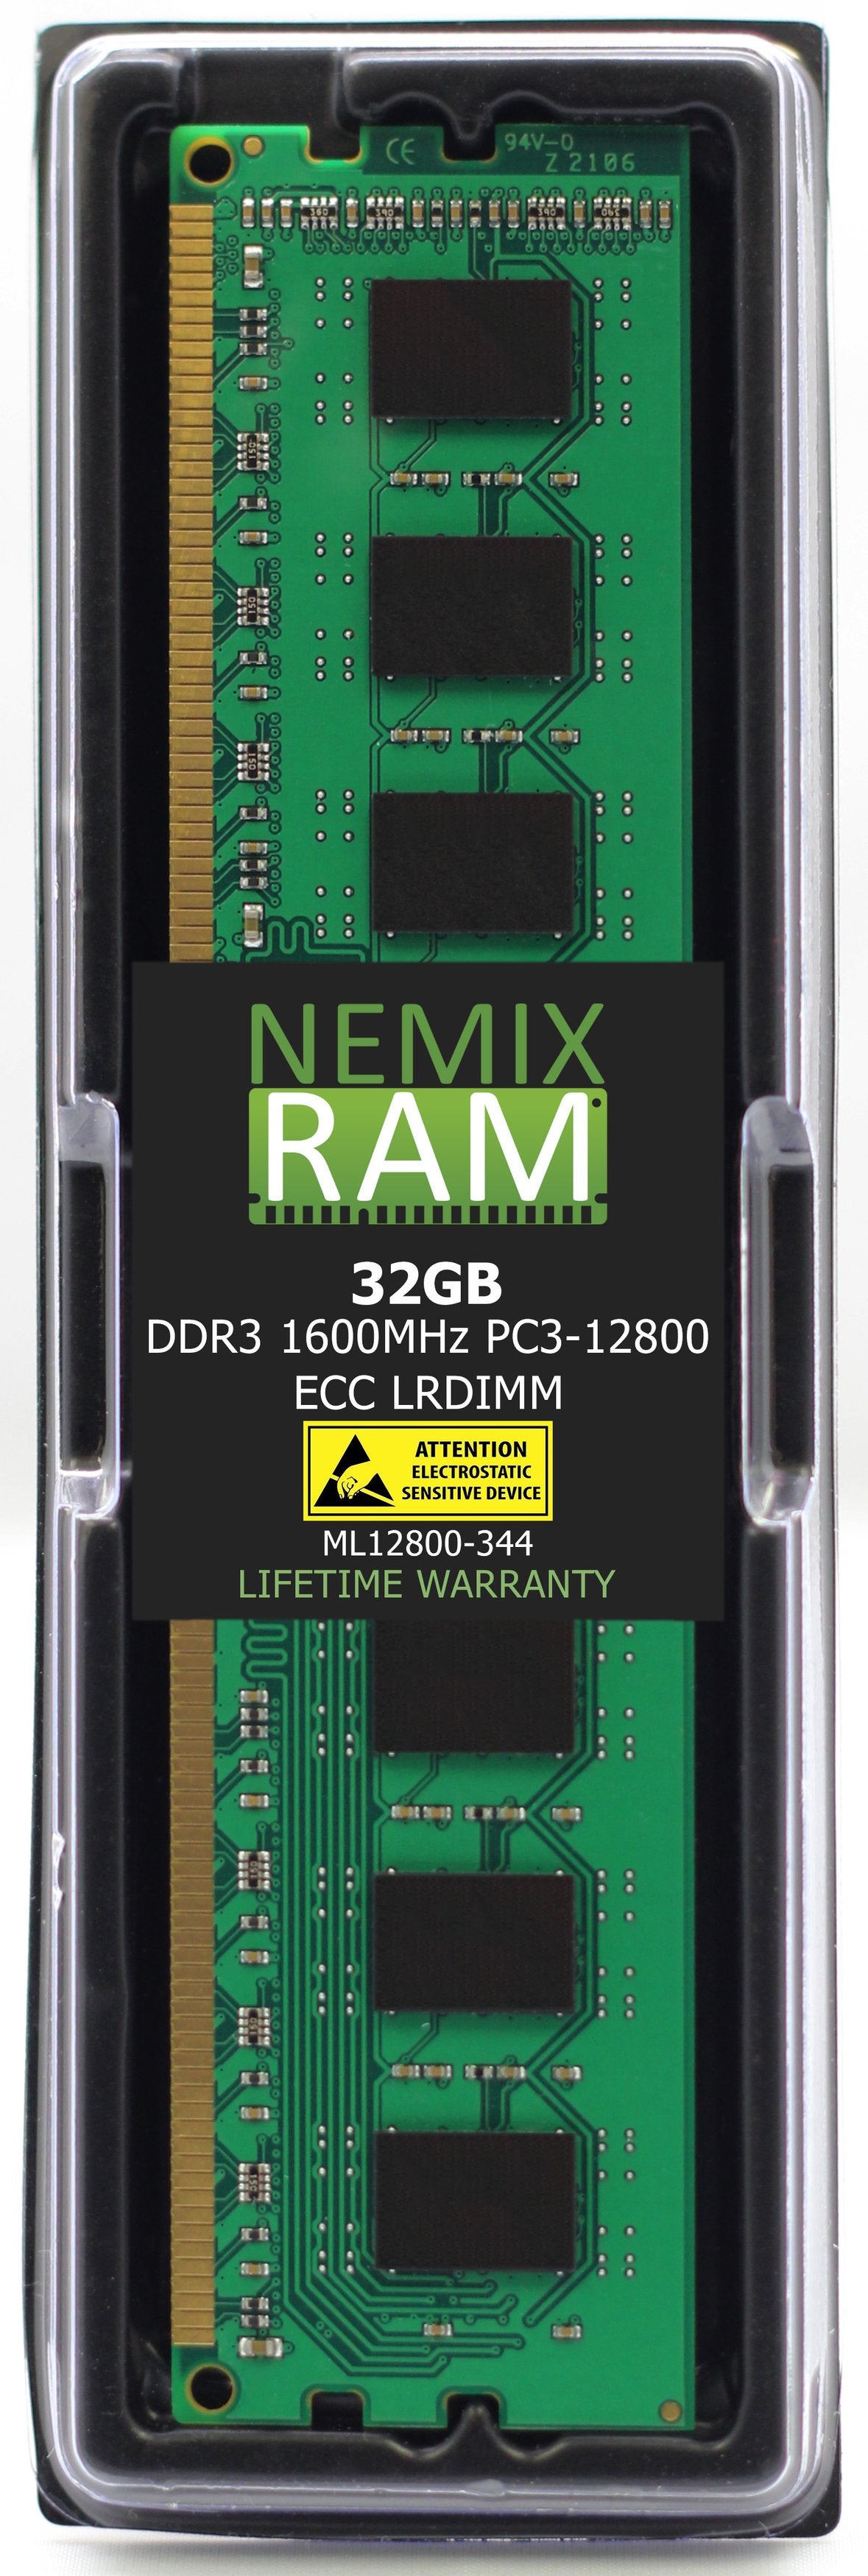 Hynix HMT84GL7BMR4C-PB 32GB DDR3 1600MHZ PC3-12800 LRDIMM Compatible Memory Module